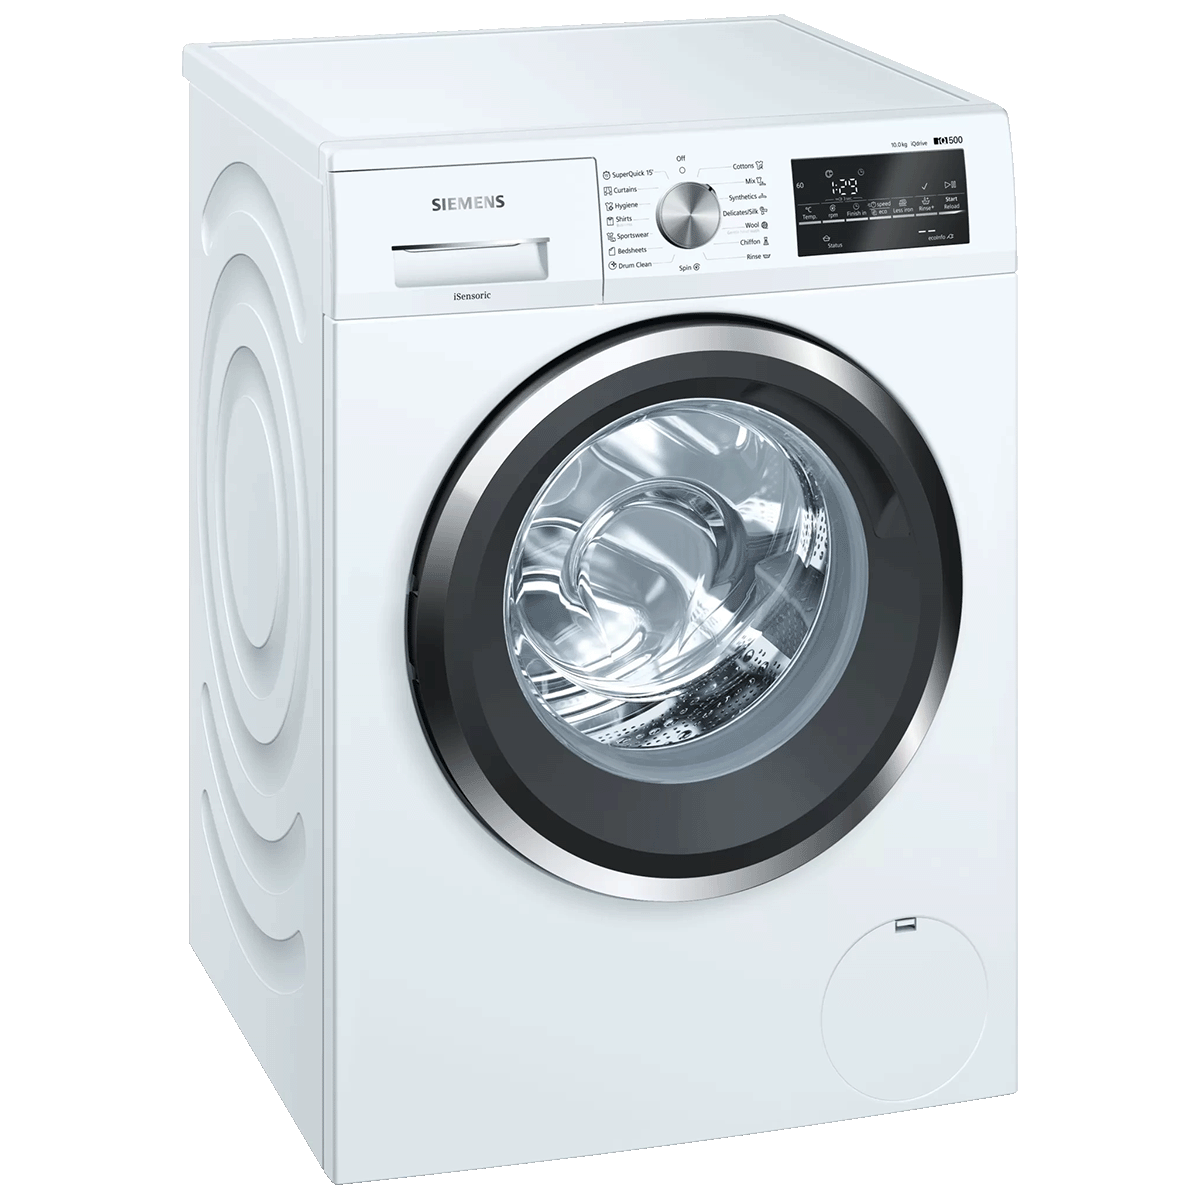 Siemens iQ500 10 Kg Fully Automatic Front Load Washing Machine (WM14U460IN, White)_1